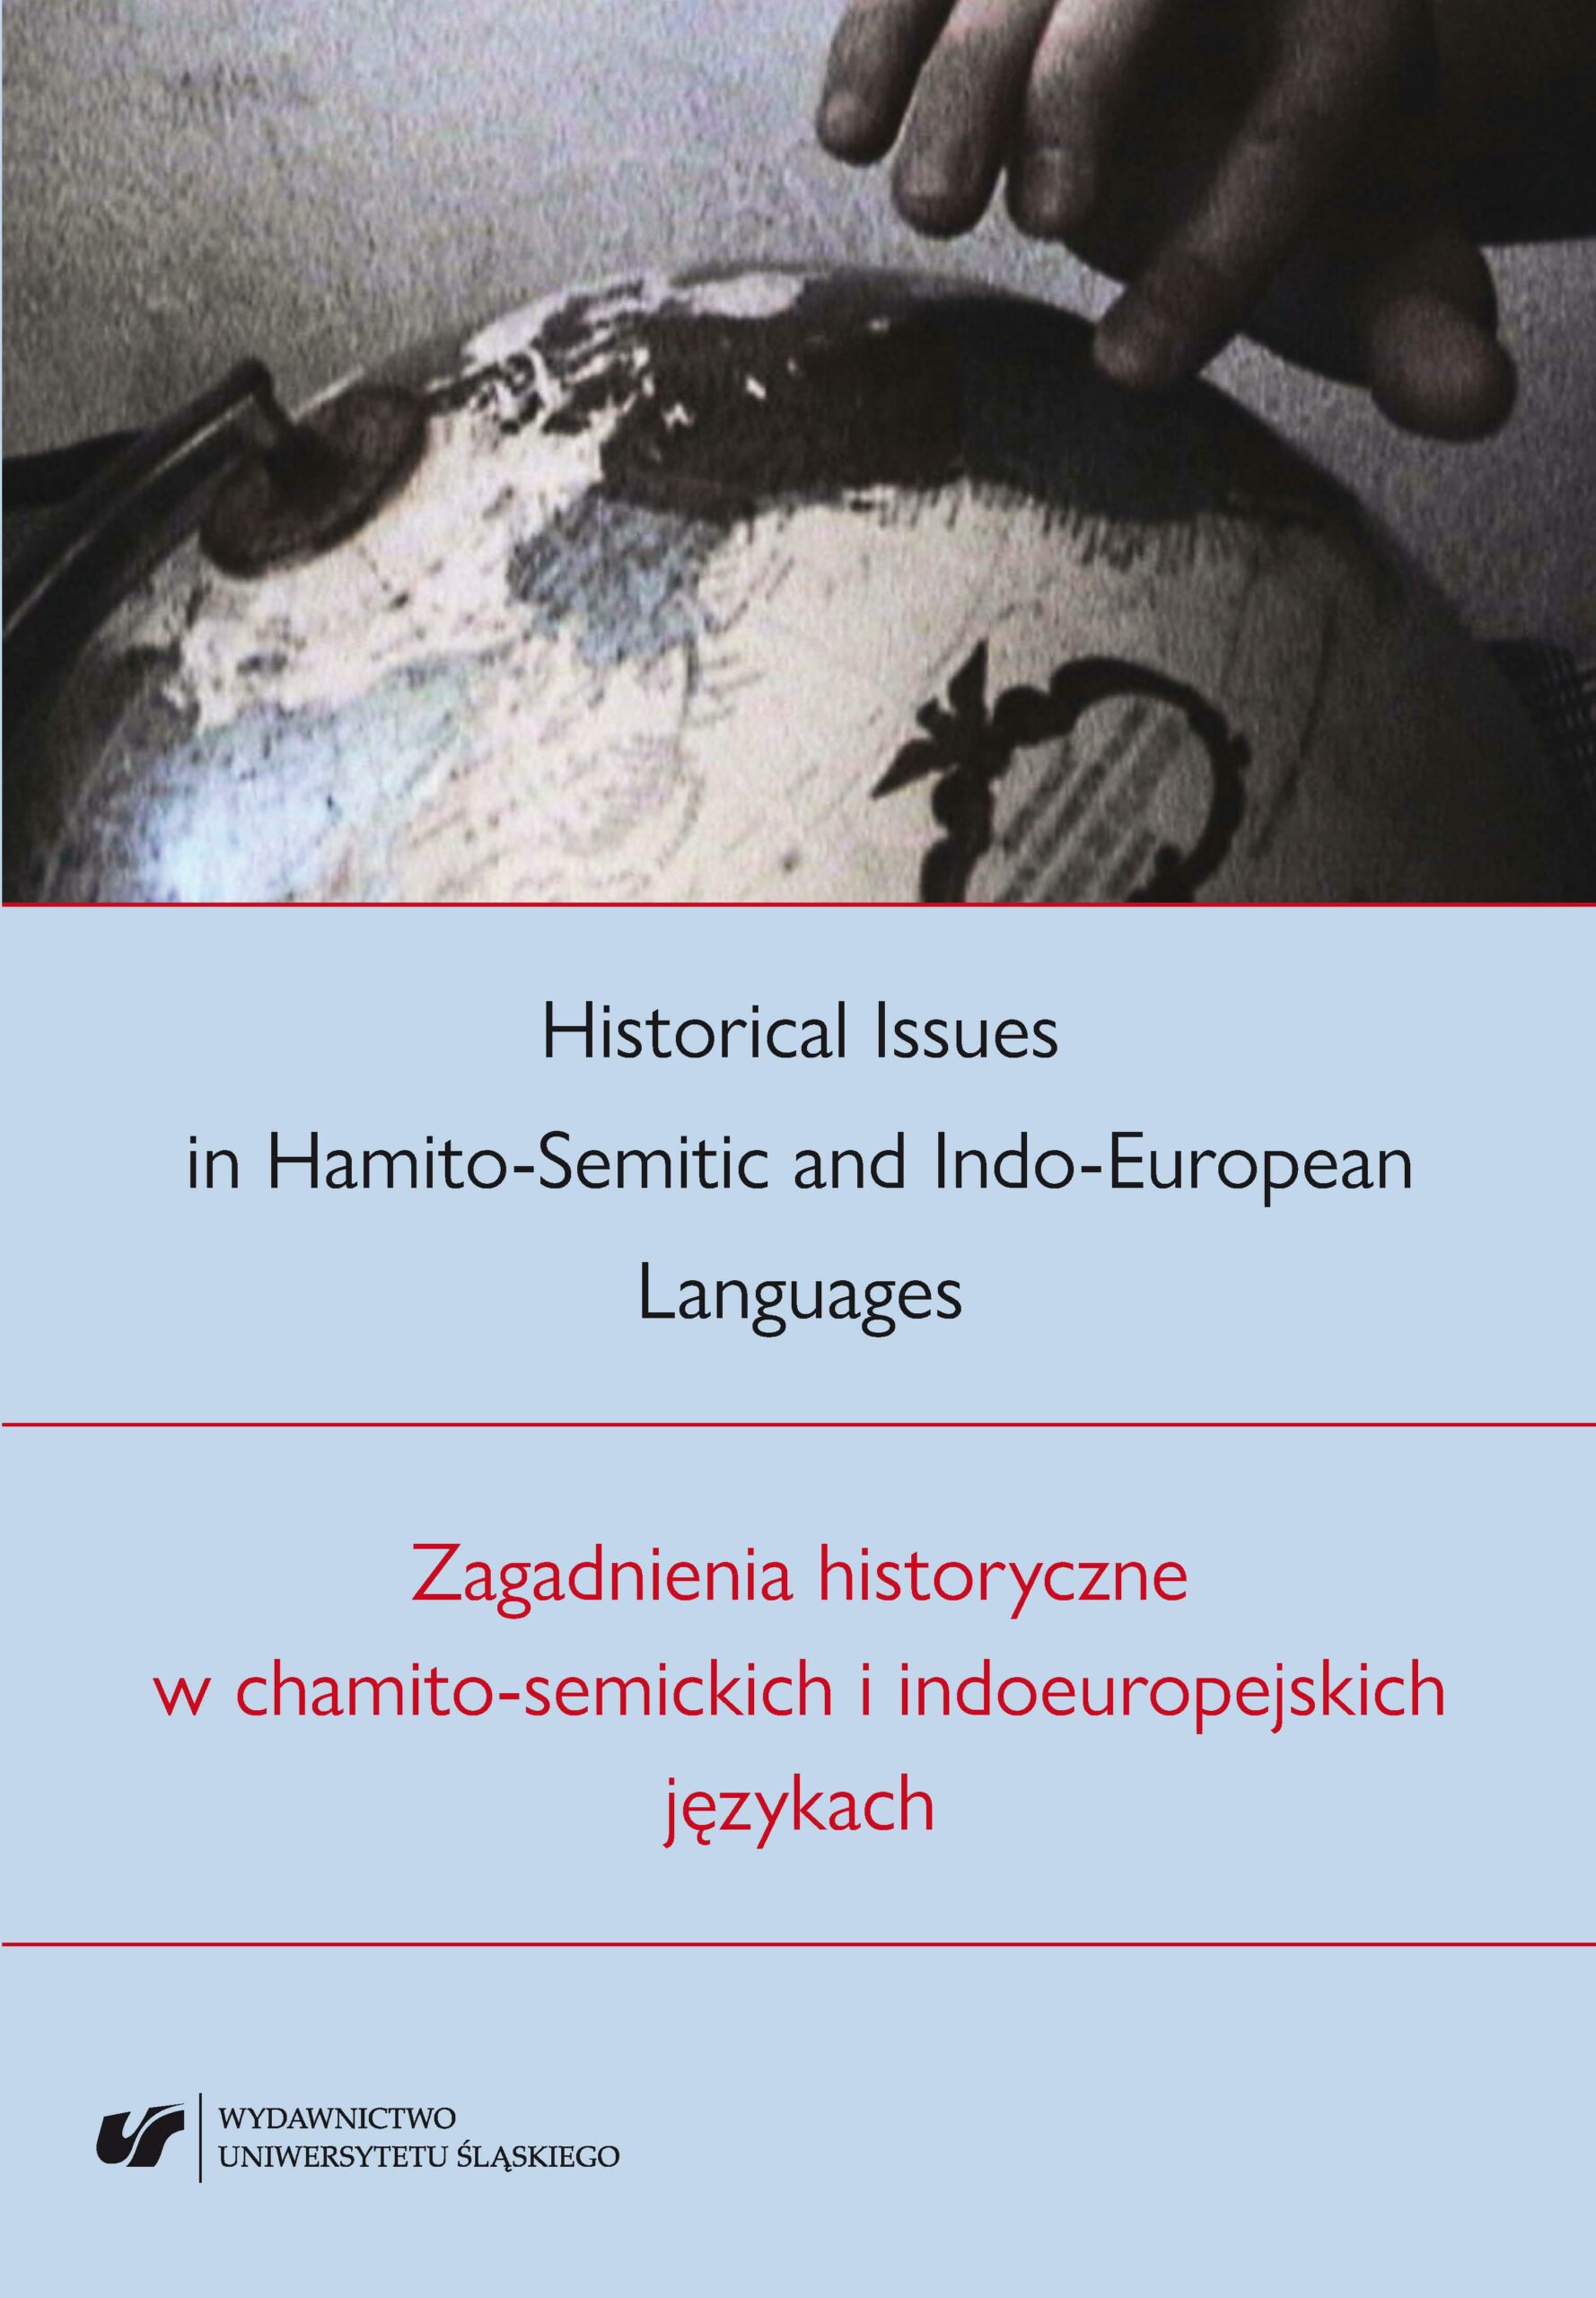 Historical issues in Hamito-Semitic and Indo-European languages Zagadnienia historyczne w chamito-semickich i indoeuropejskich językach